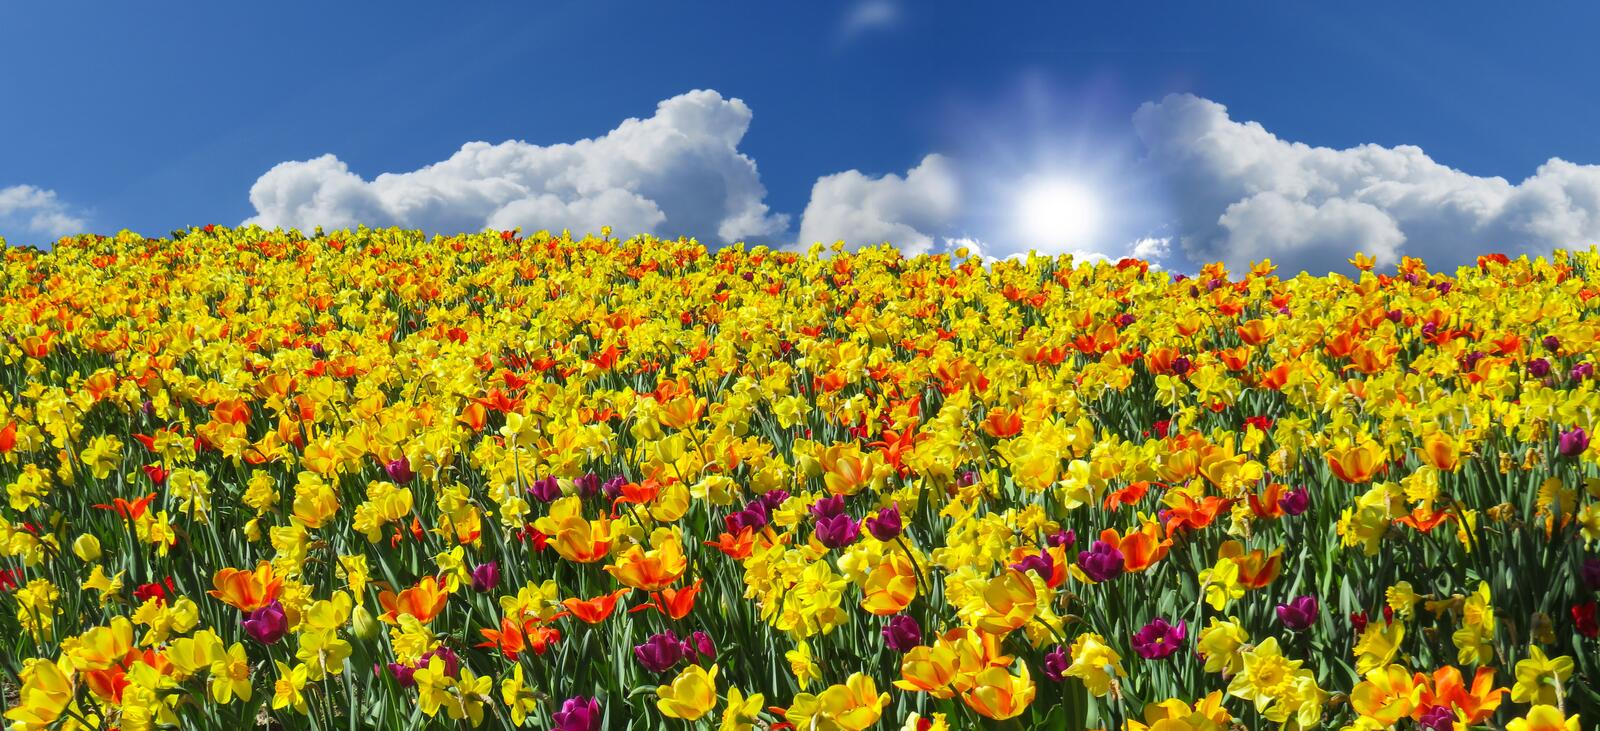 Wallpapers field tulips daffodils on the desktop